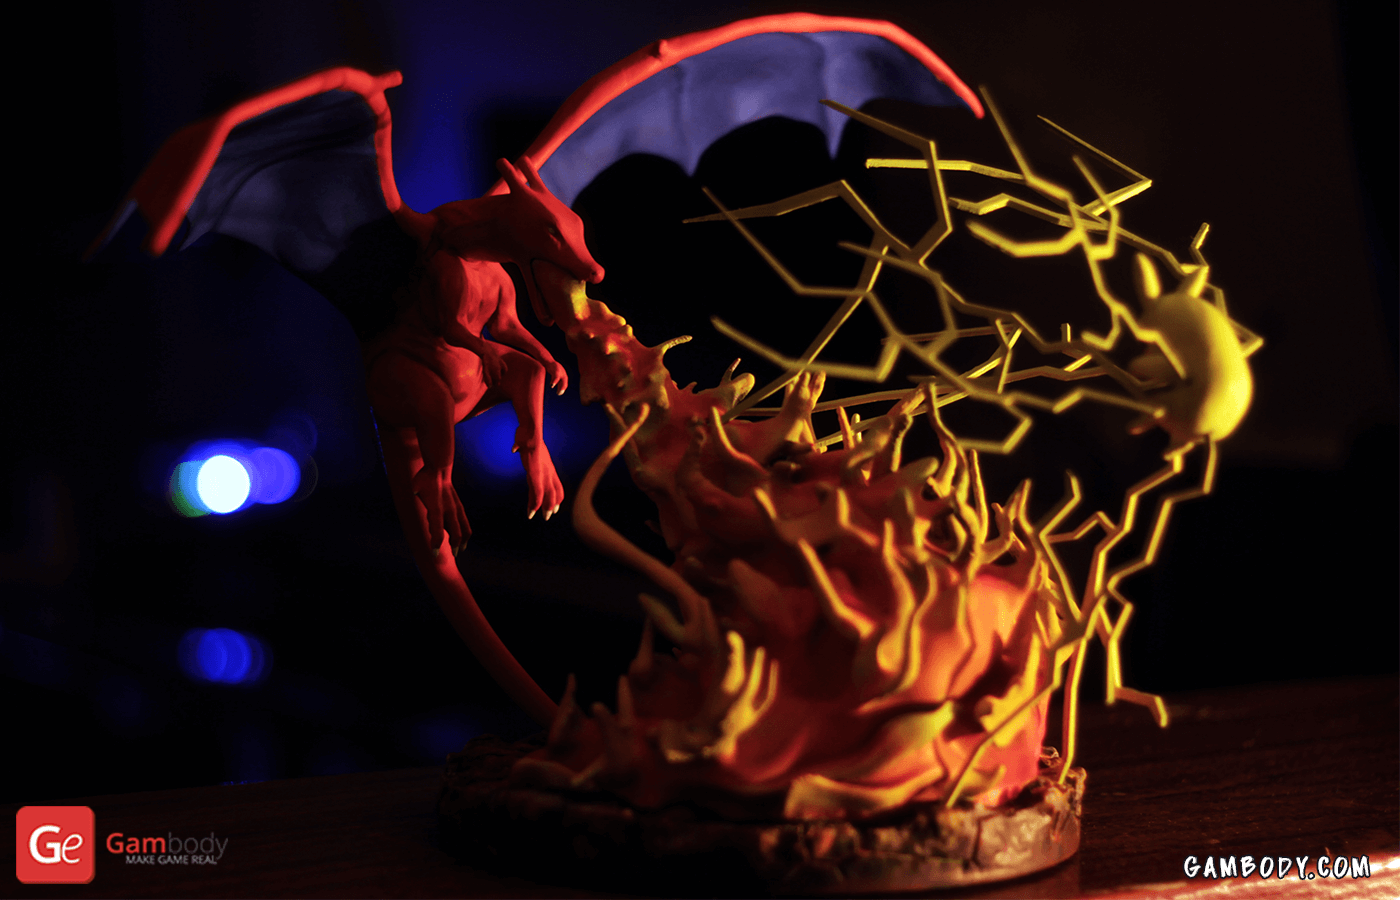 Pikachu & Charizard 3D Printing Diorama